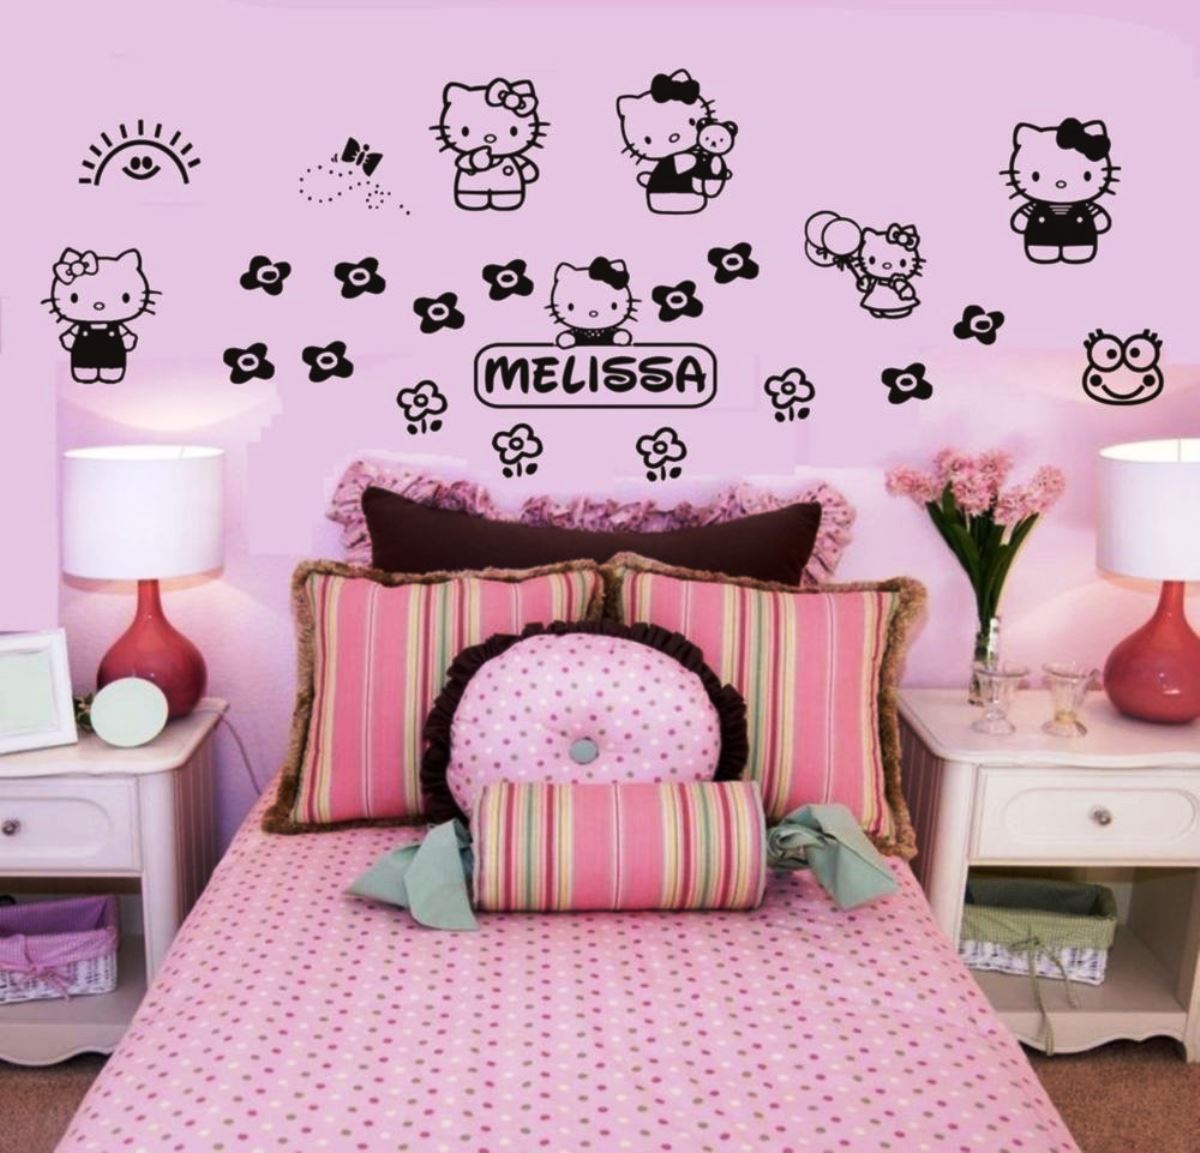 Hello Kitty Bedroom Decorations